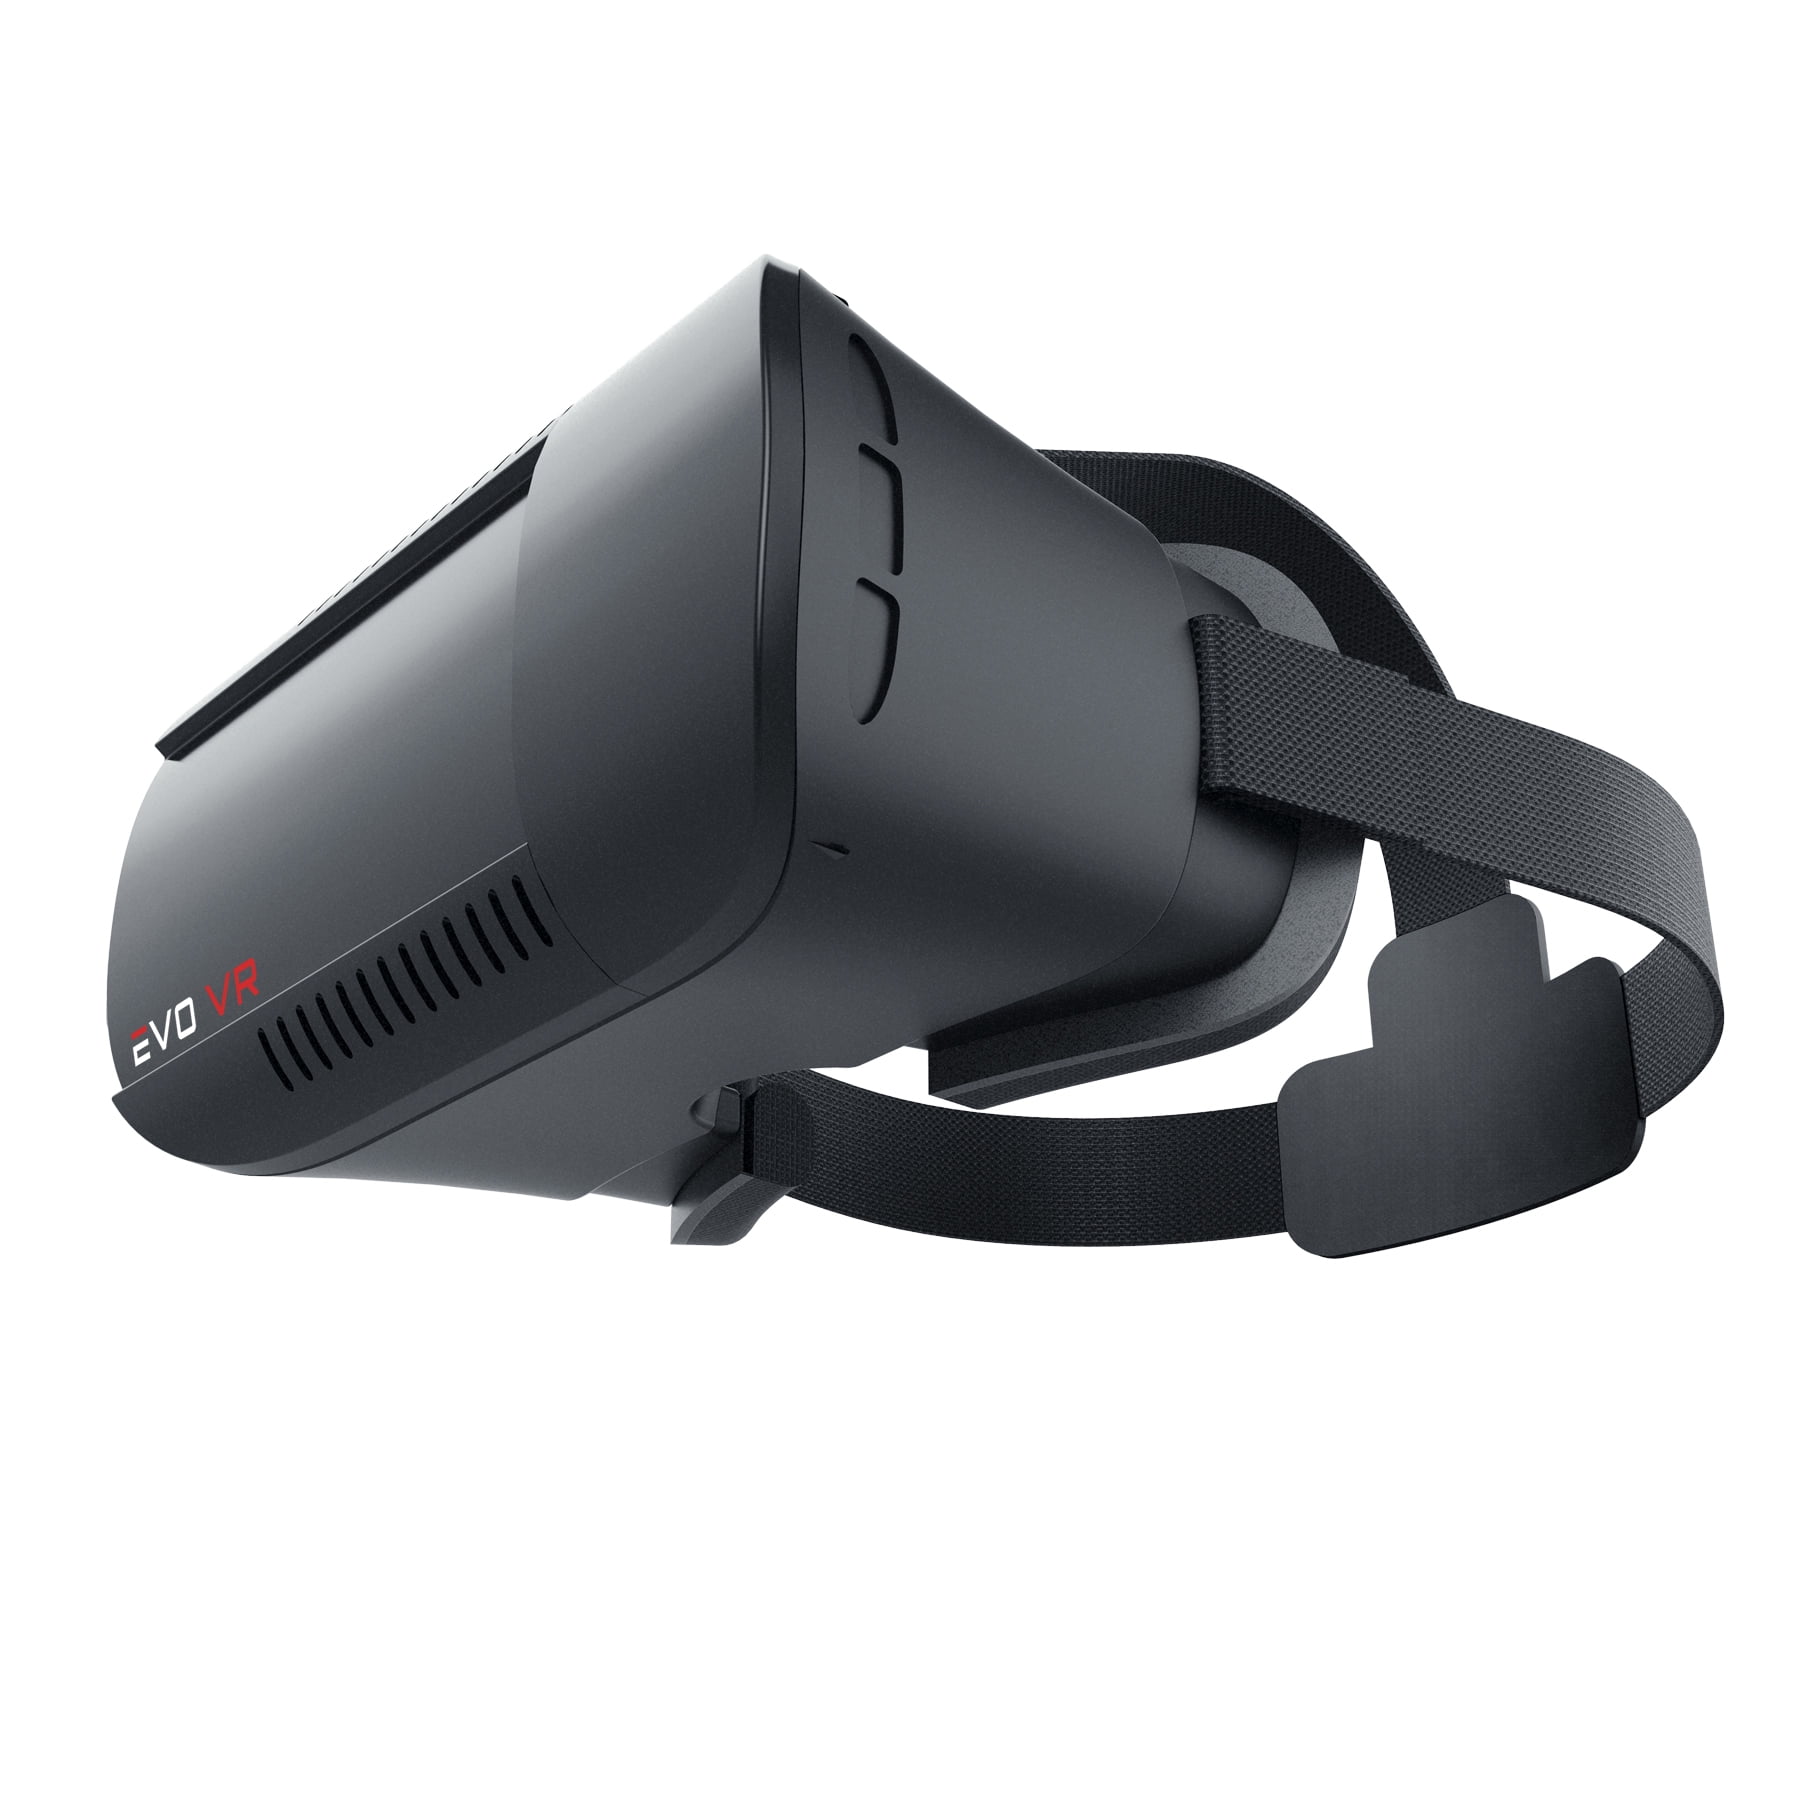 Evo Vr Mi Vrh01 101 Evo Next Virtual Reality Headset Walmart Com Walmart Com